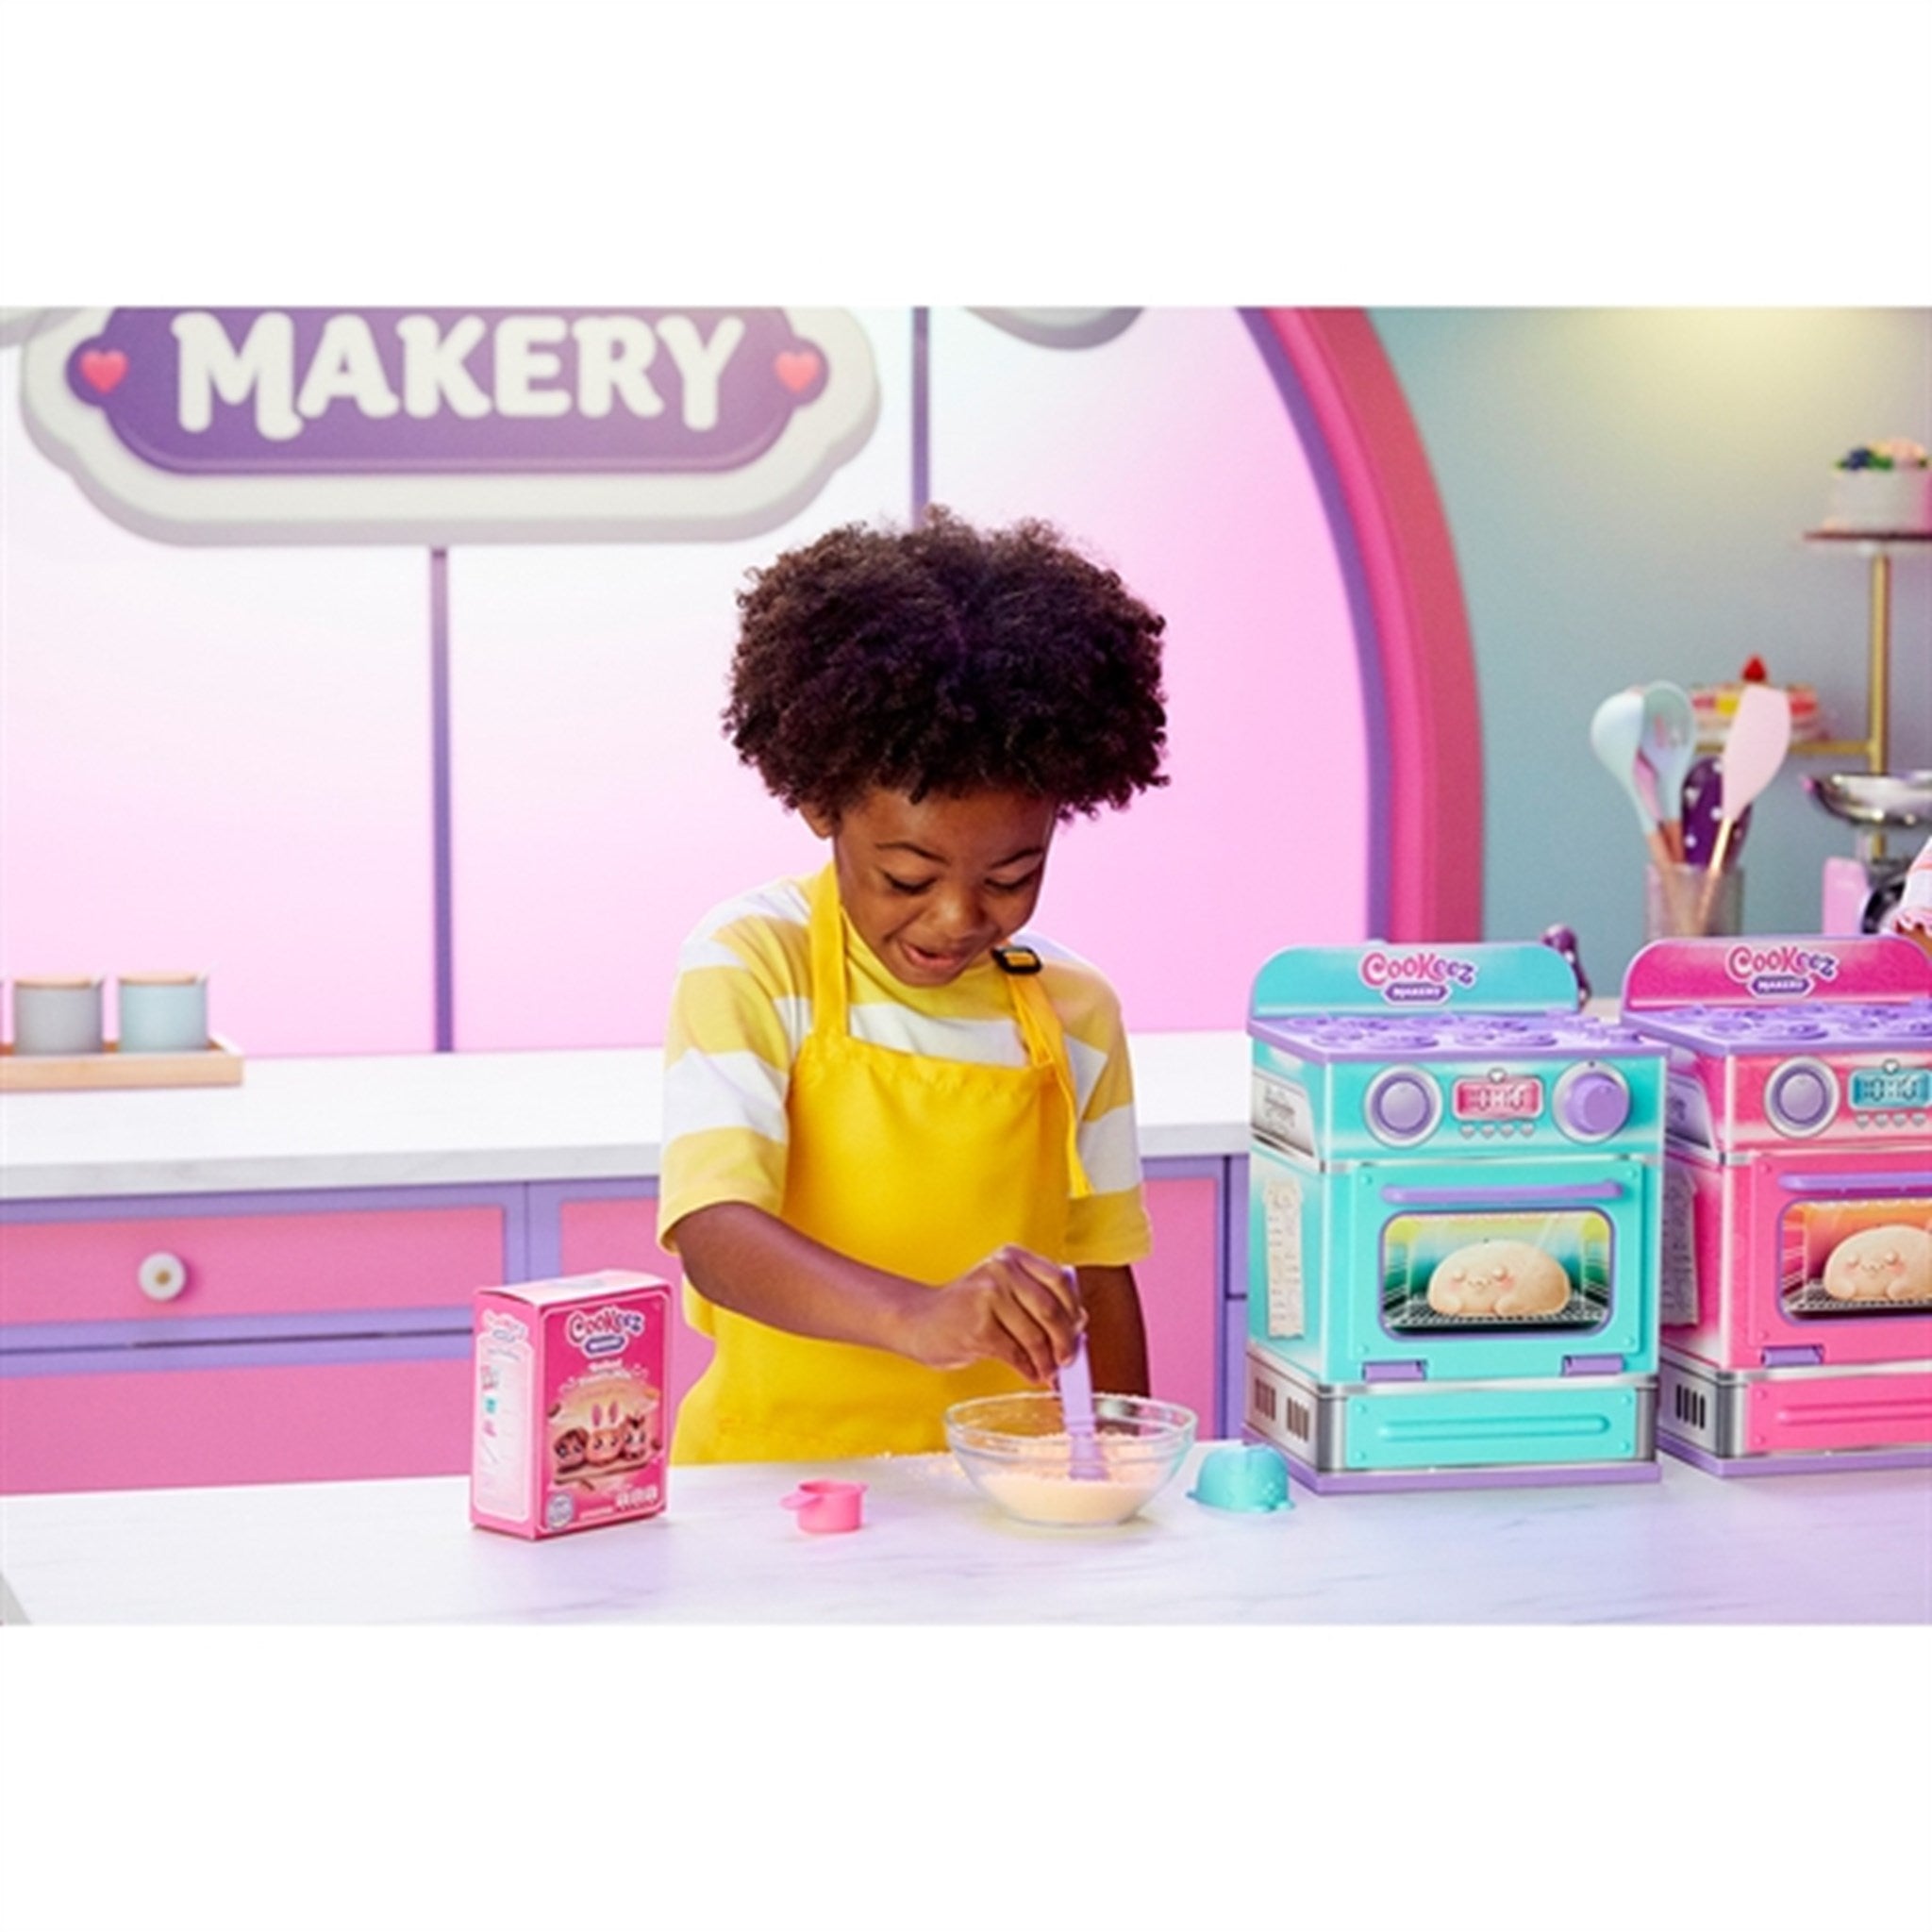 Cookeez Makery Oven Playset Bread 2